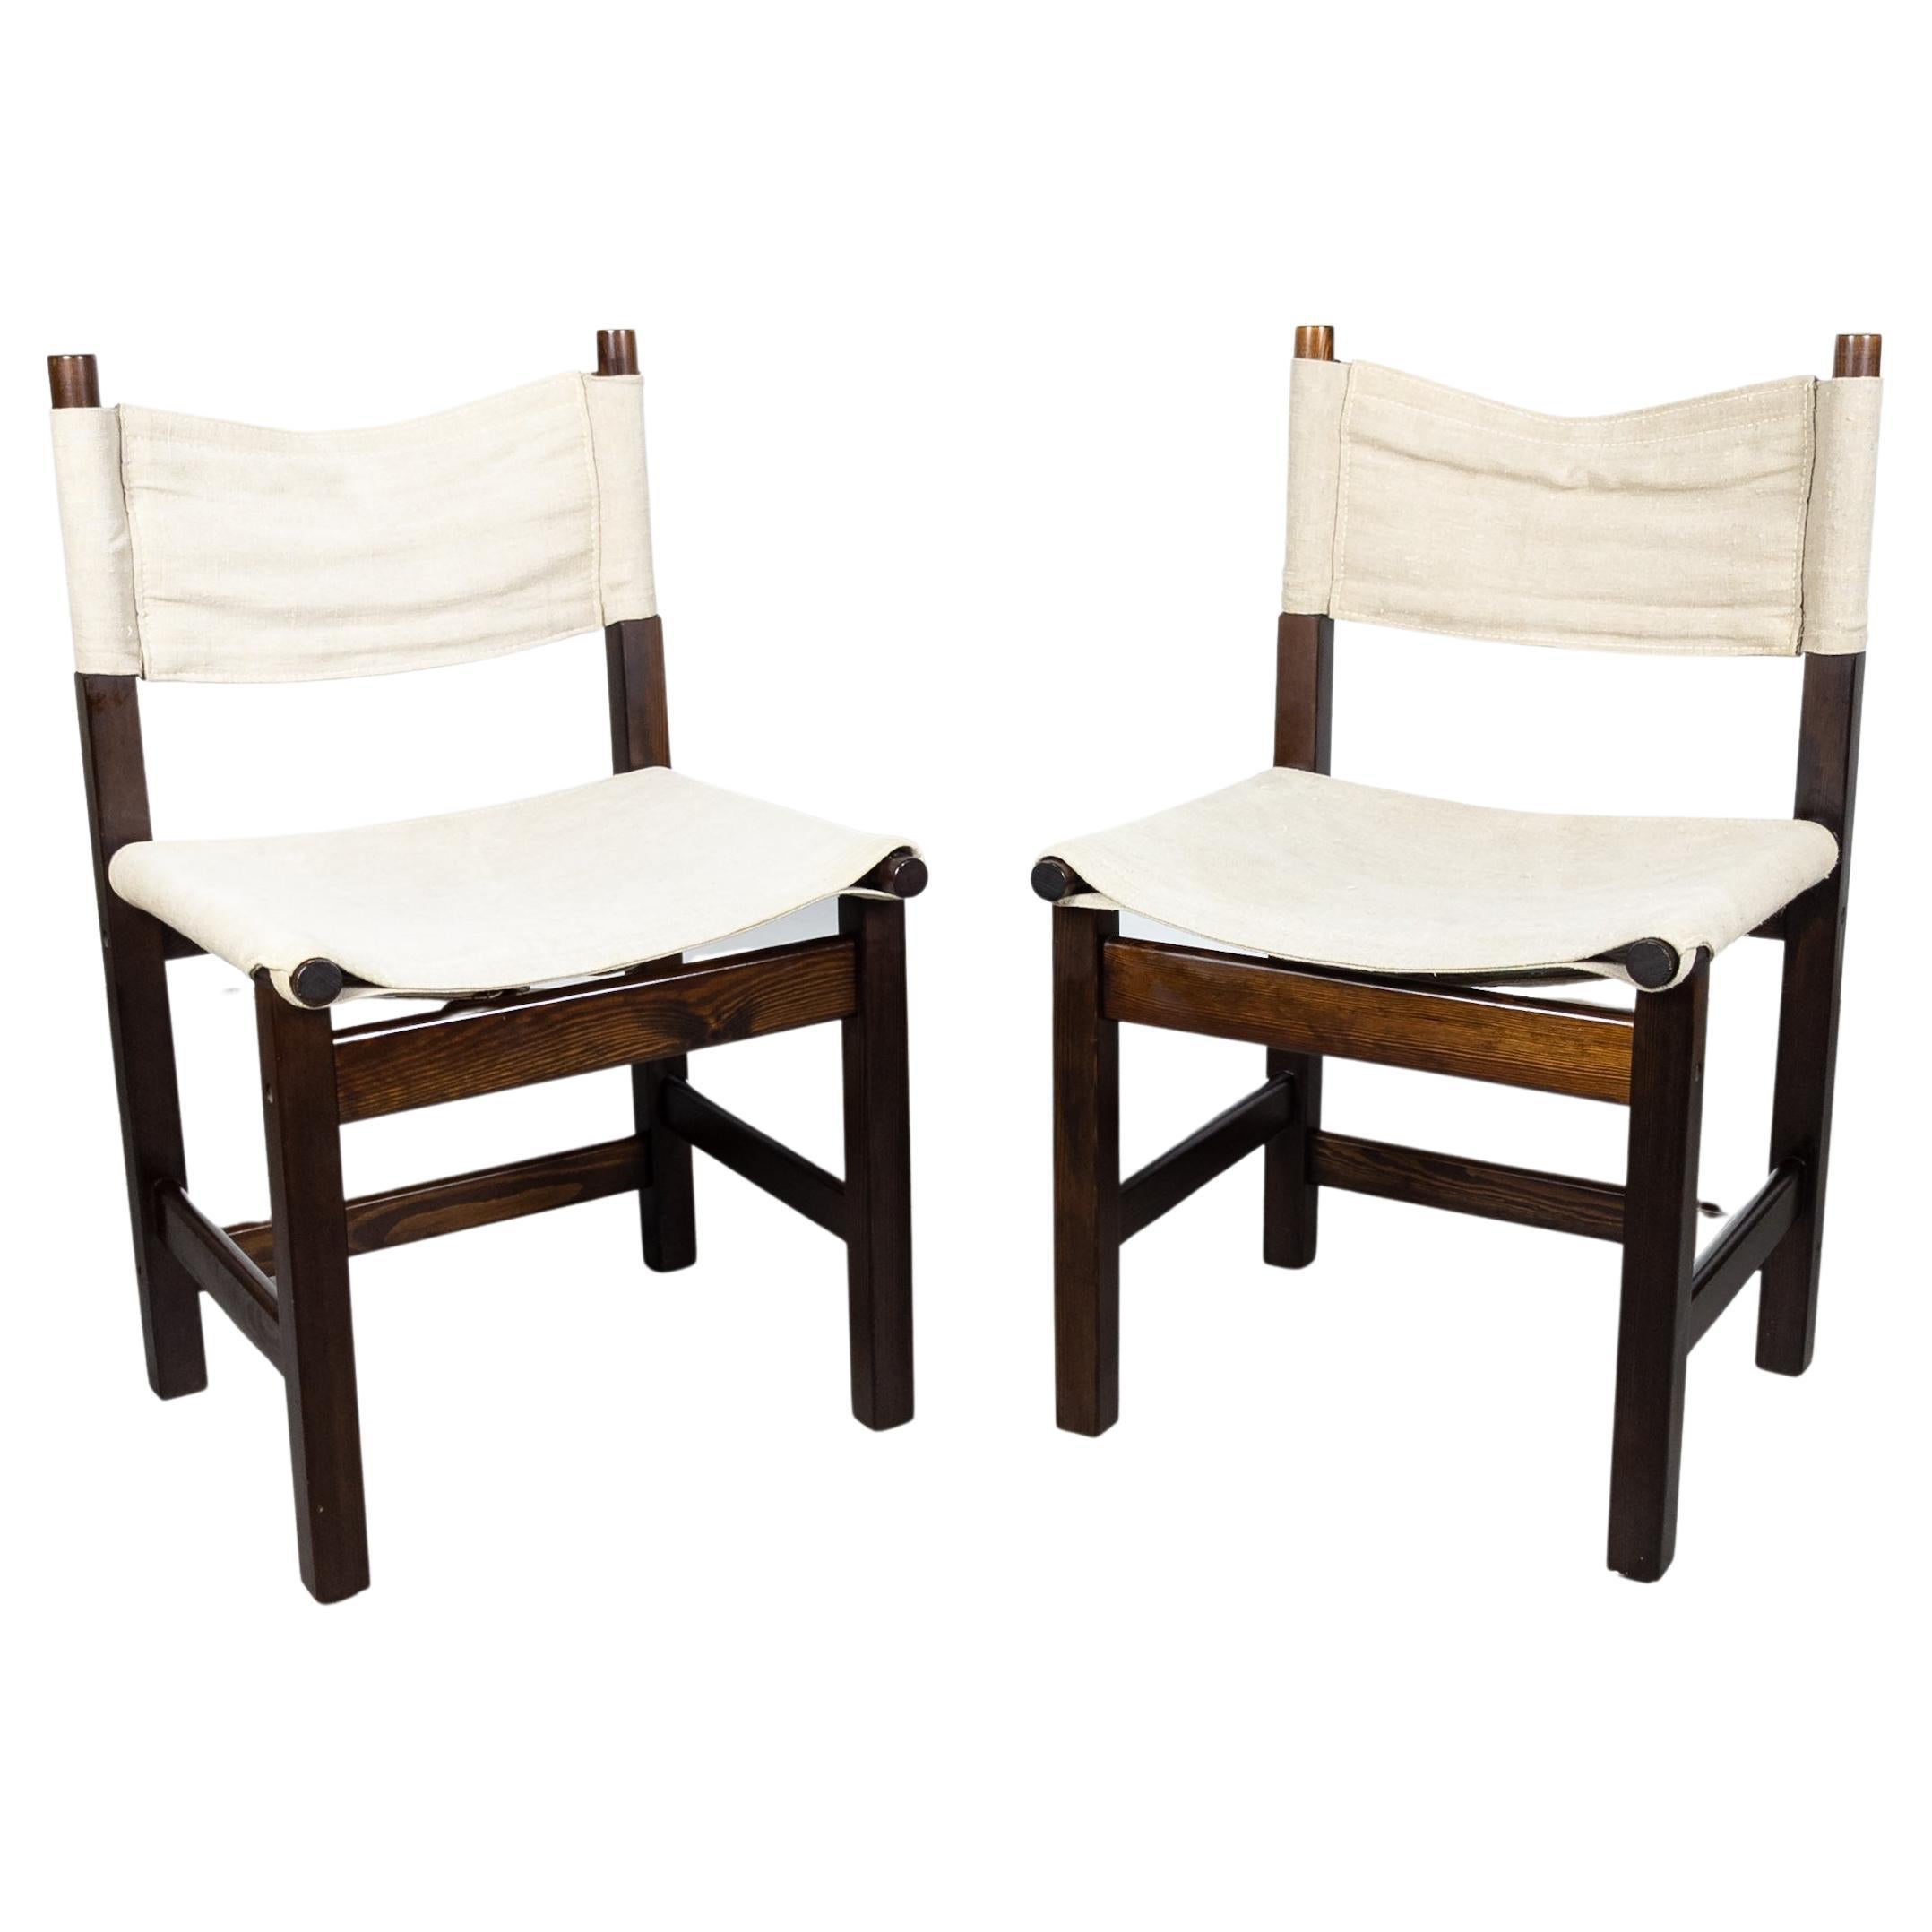 Rare Set of 6 Vintage "Kotka" Safari Chairs by Tomas Jelinek for Ikea